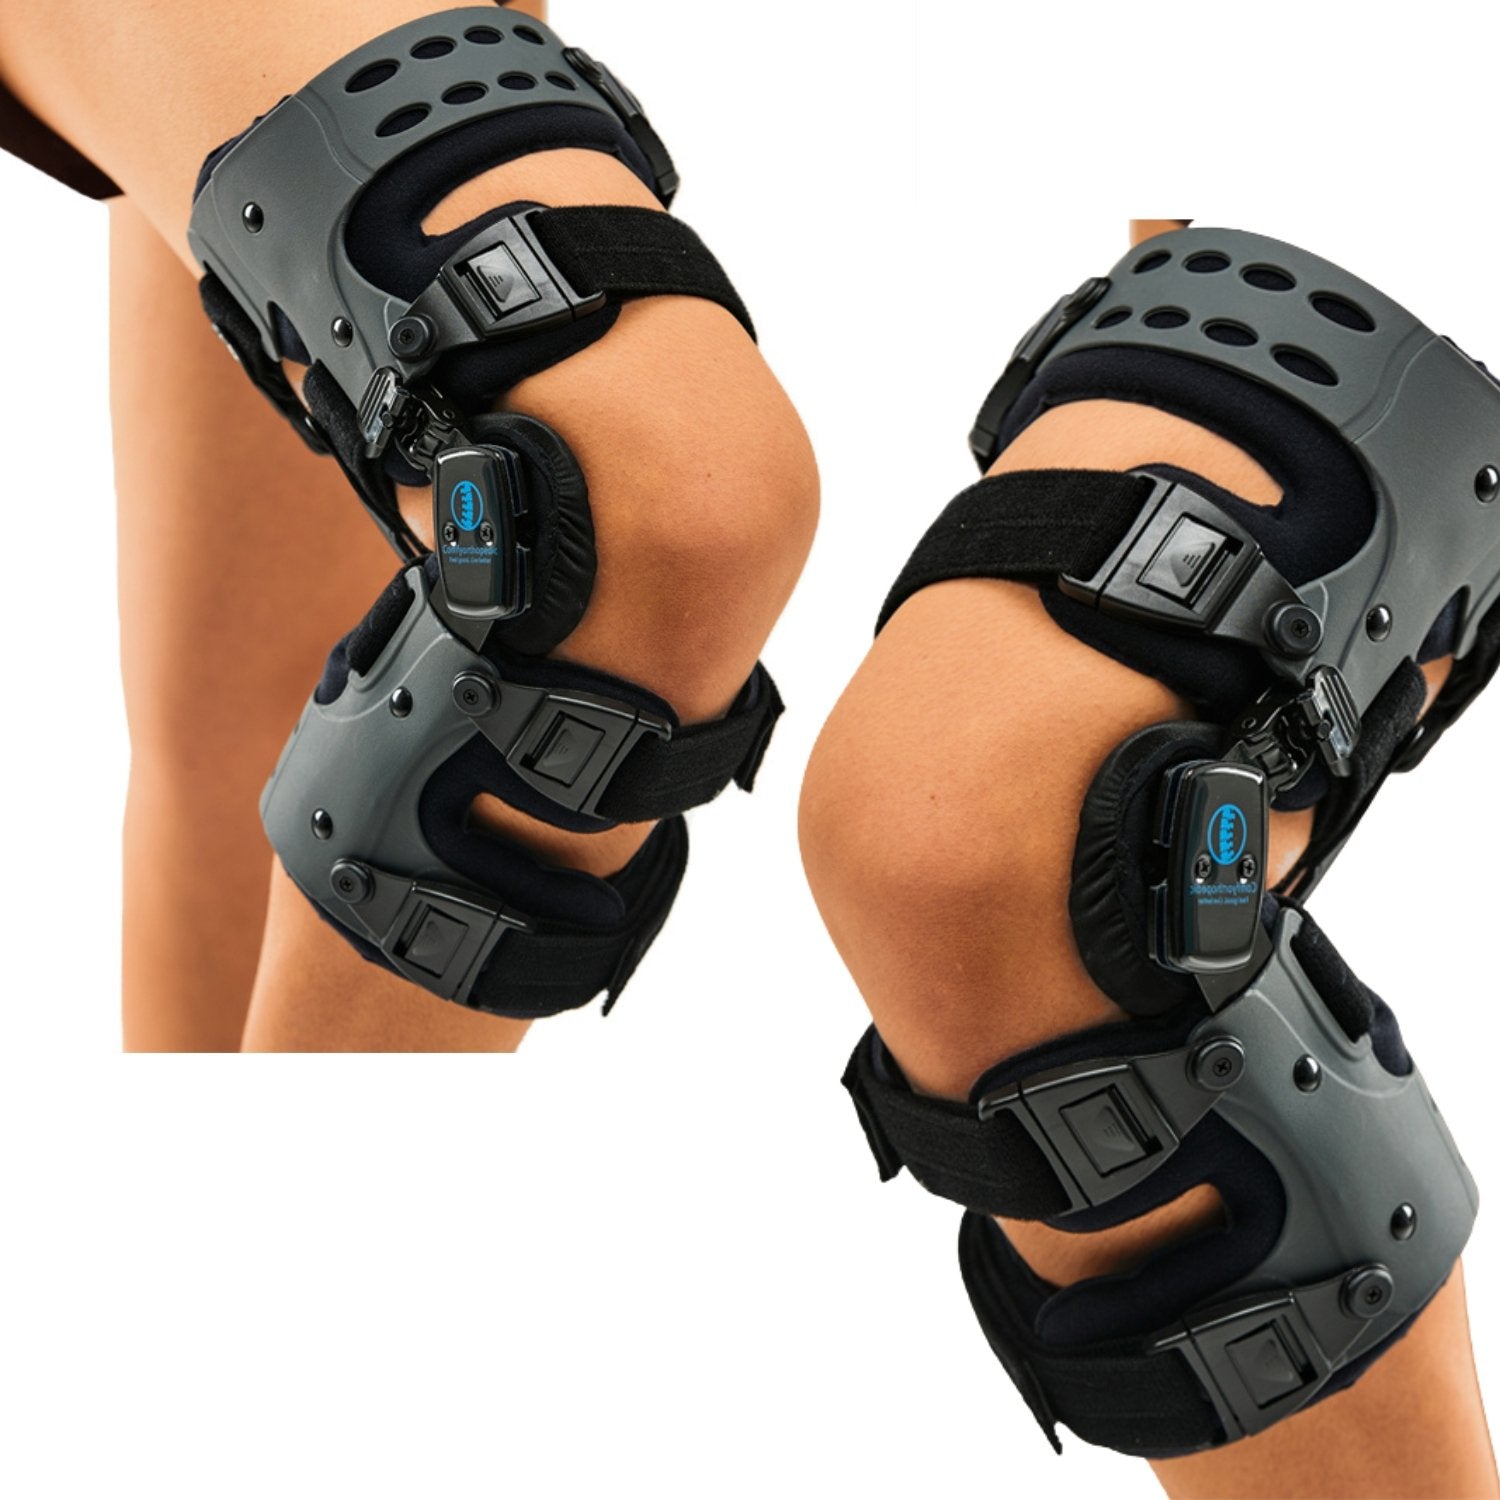 The Osteoarthritis Unloading Knee Brace